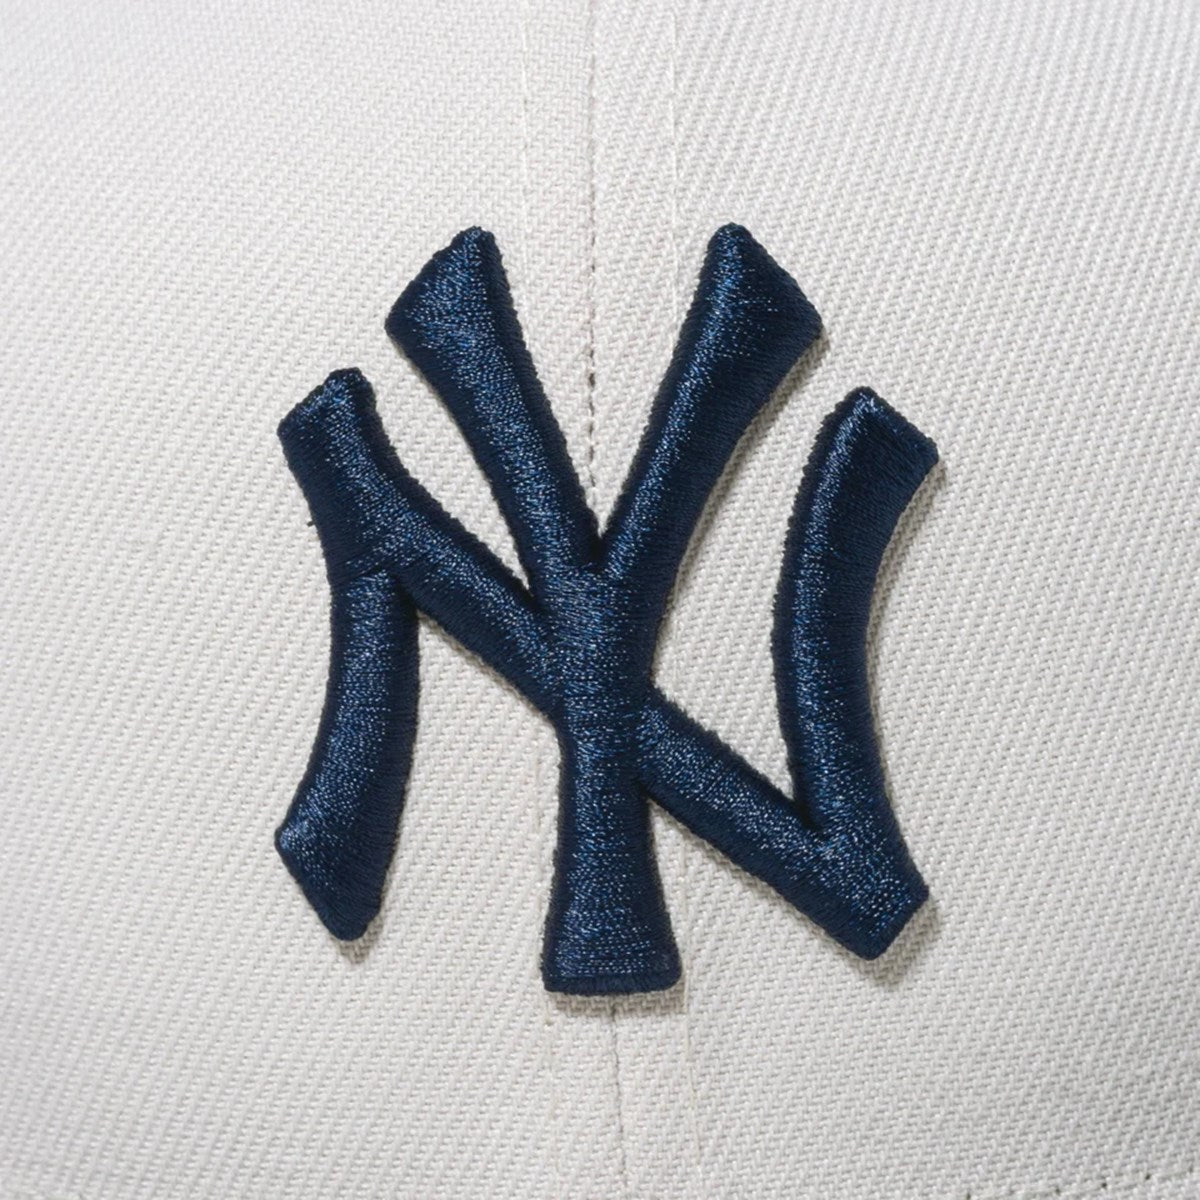 NEW ERA New York Yankees - YOUTH950 GORO NEYYAN STO NVY【14124627】